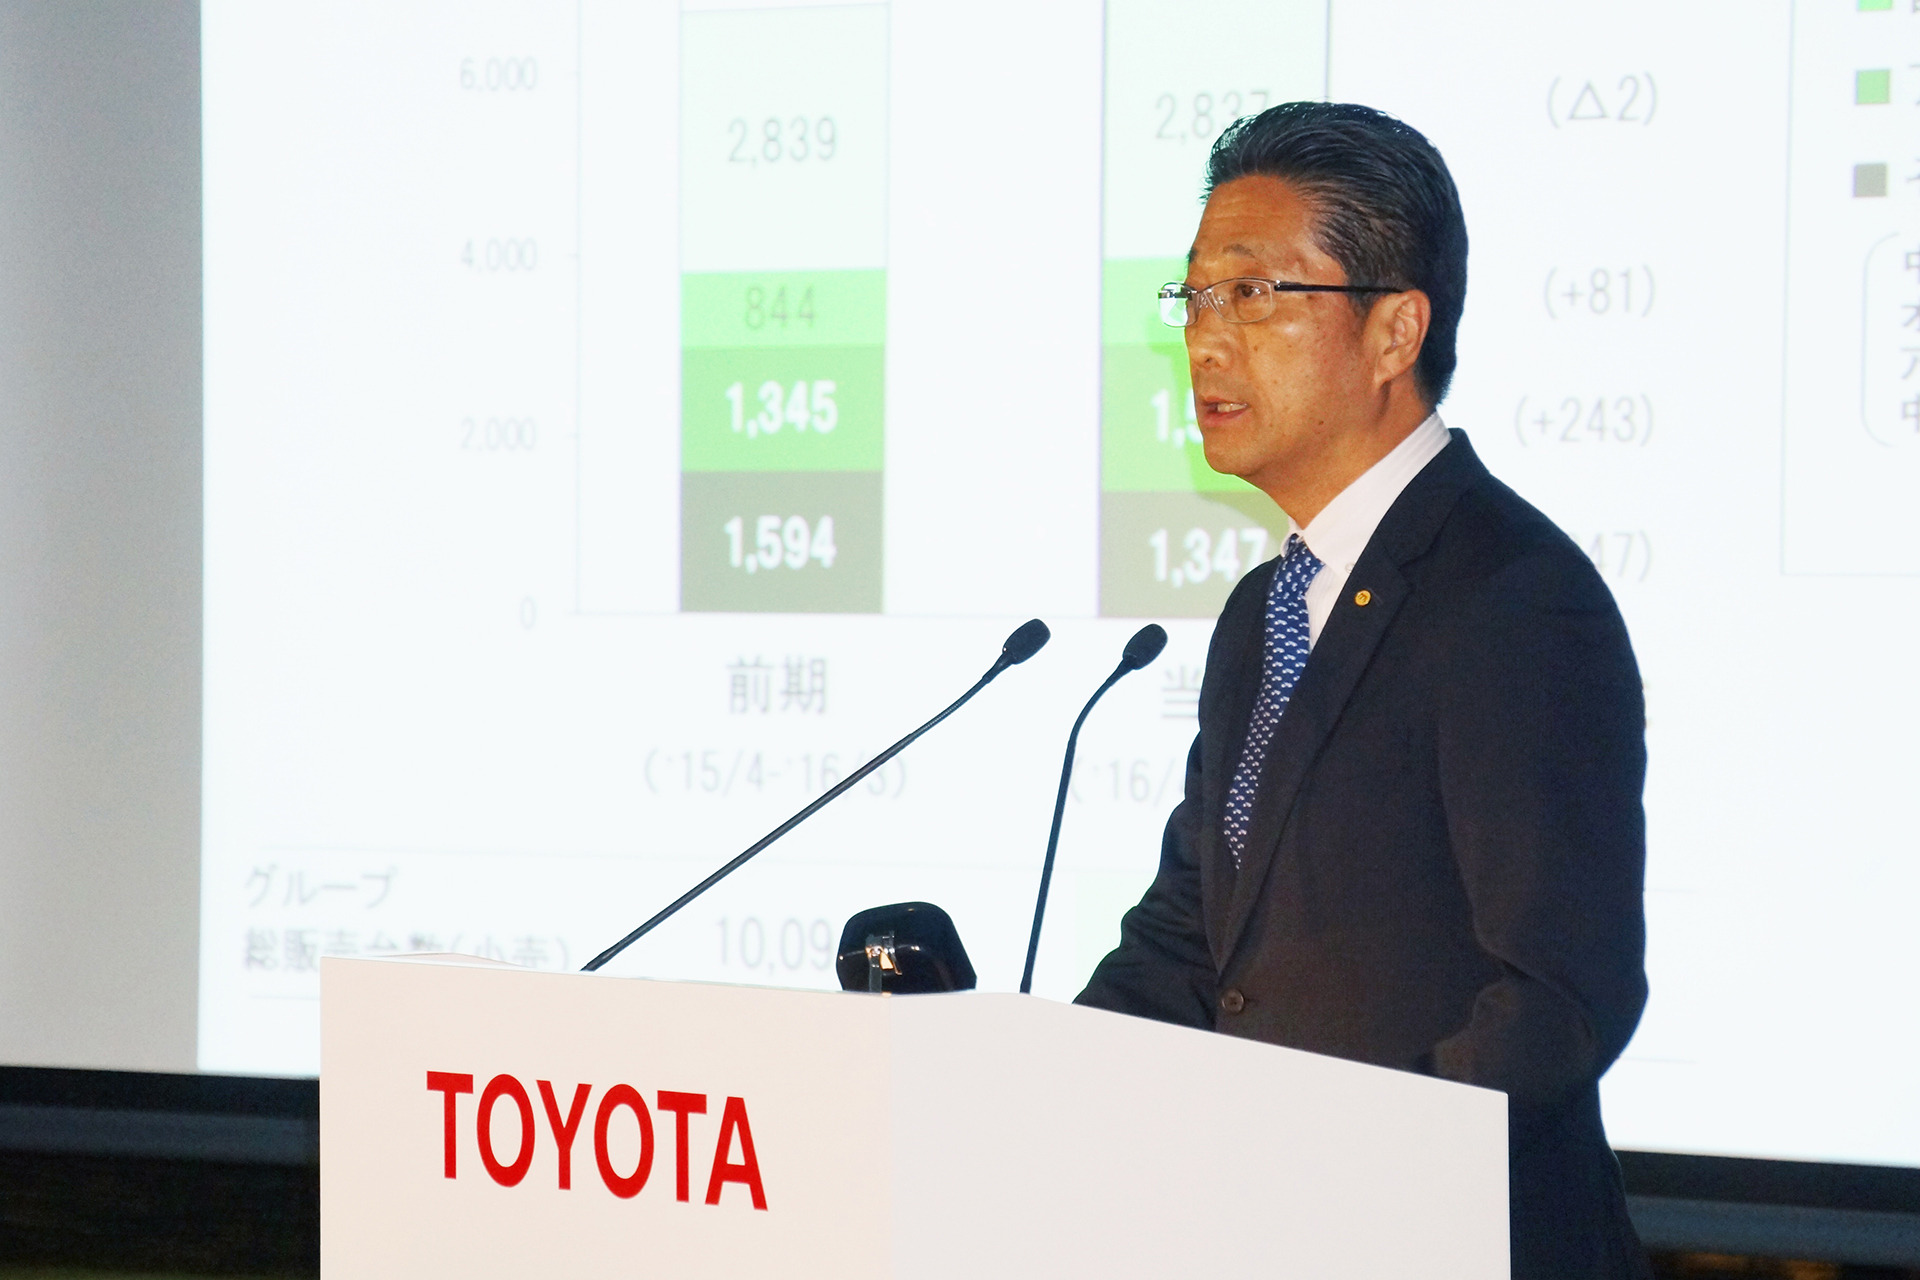 Osamu Nagata, Executive Vice President